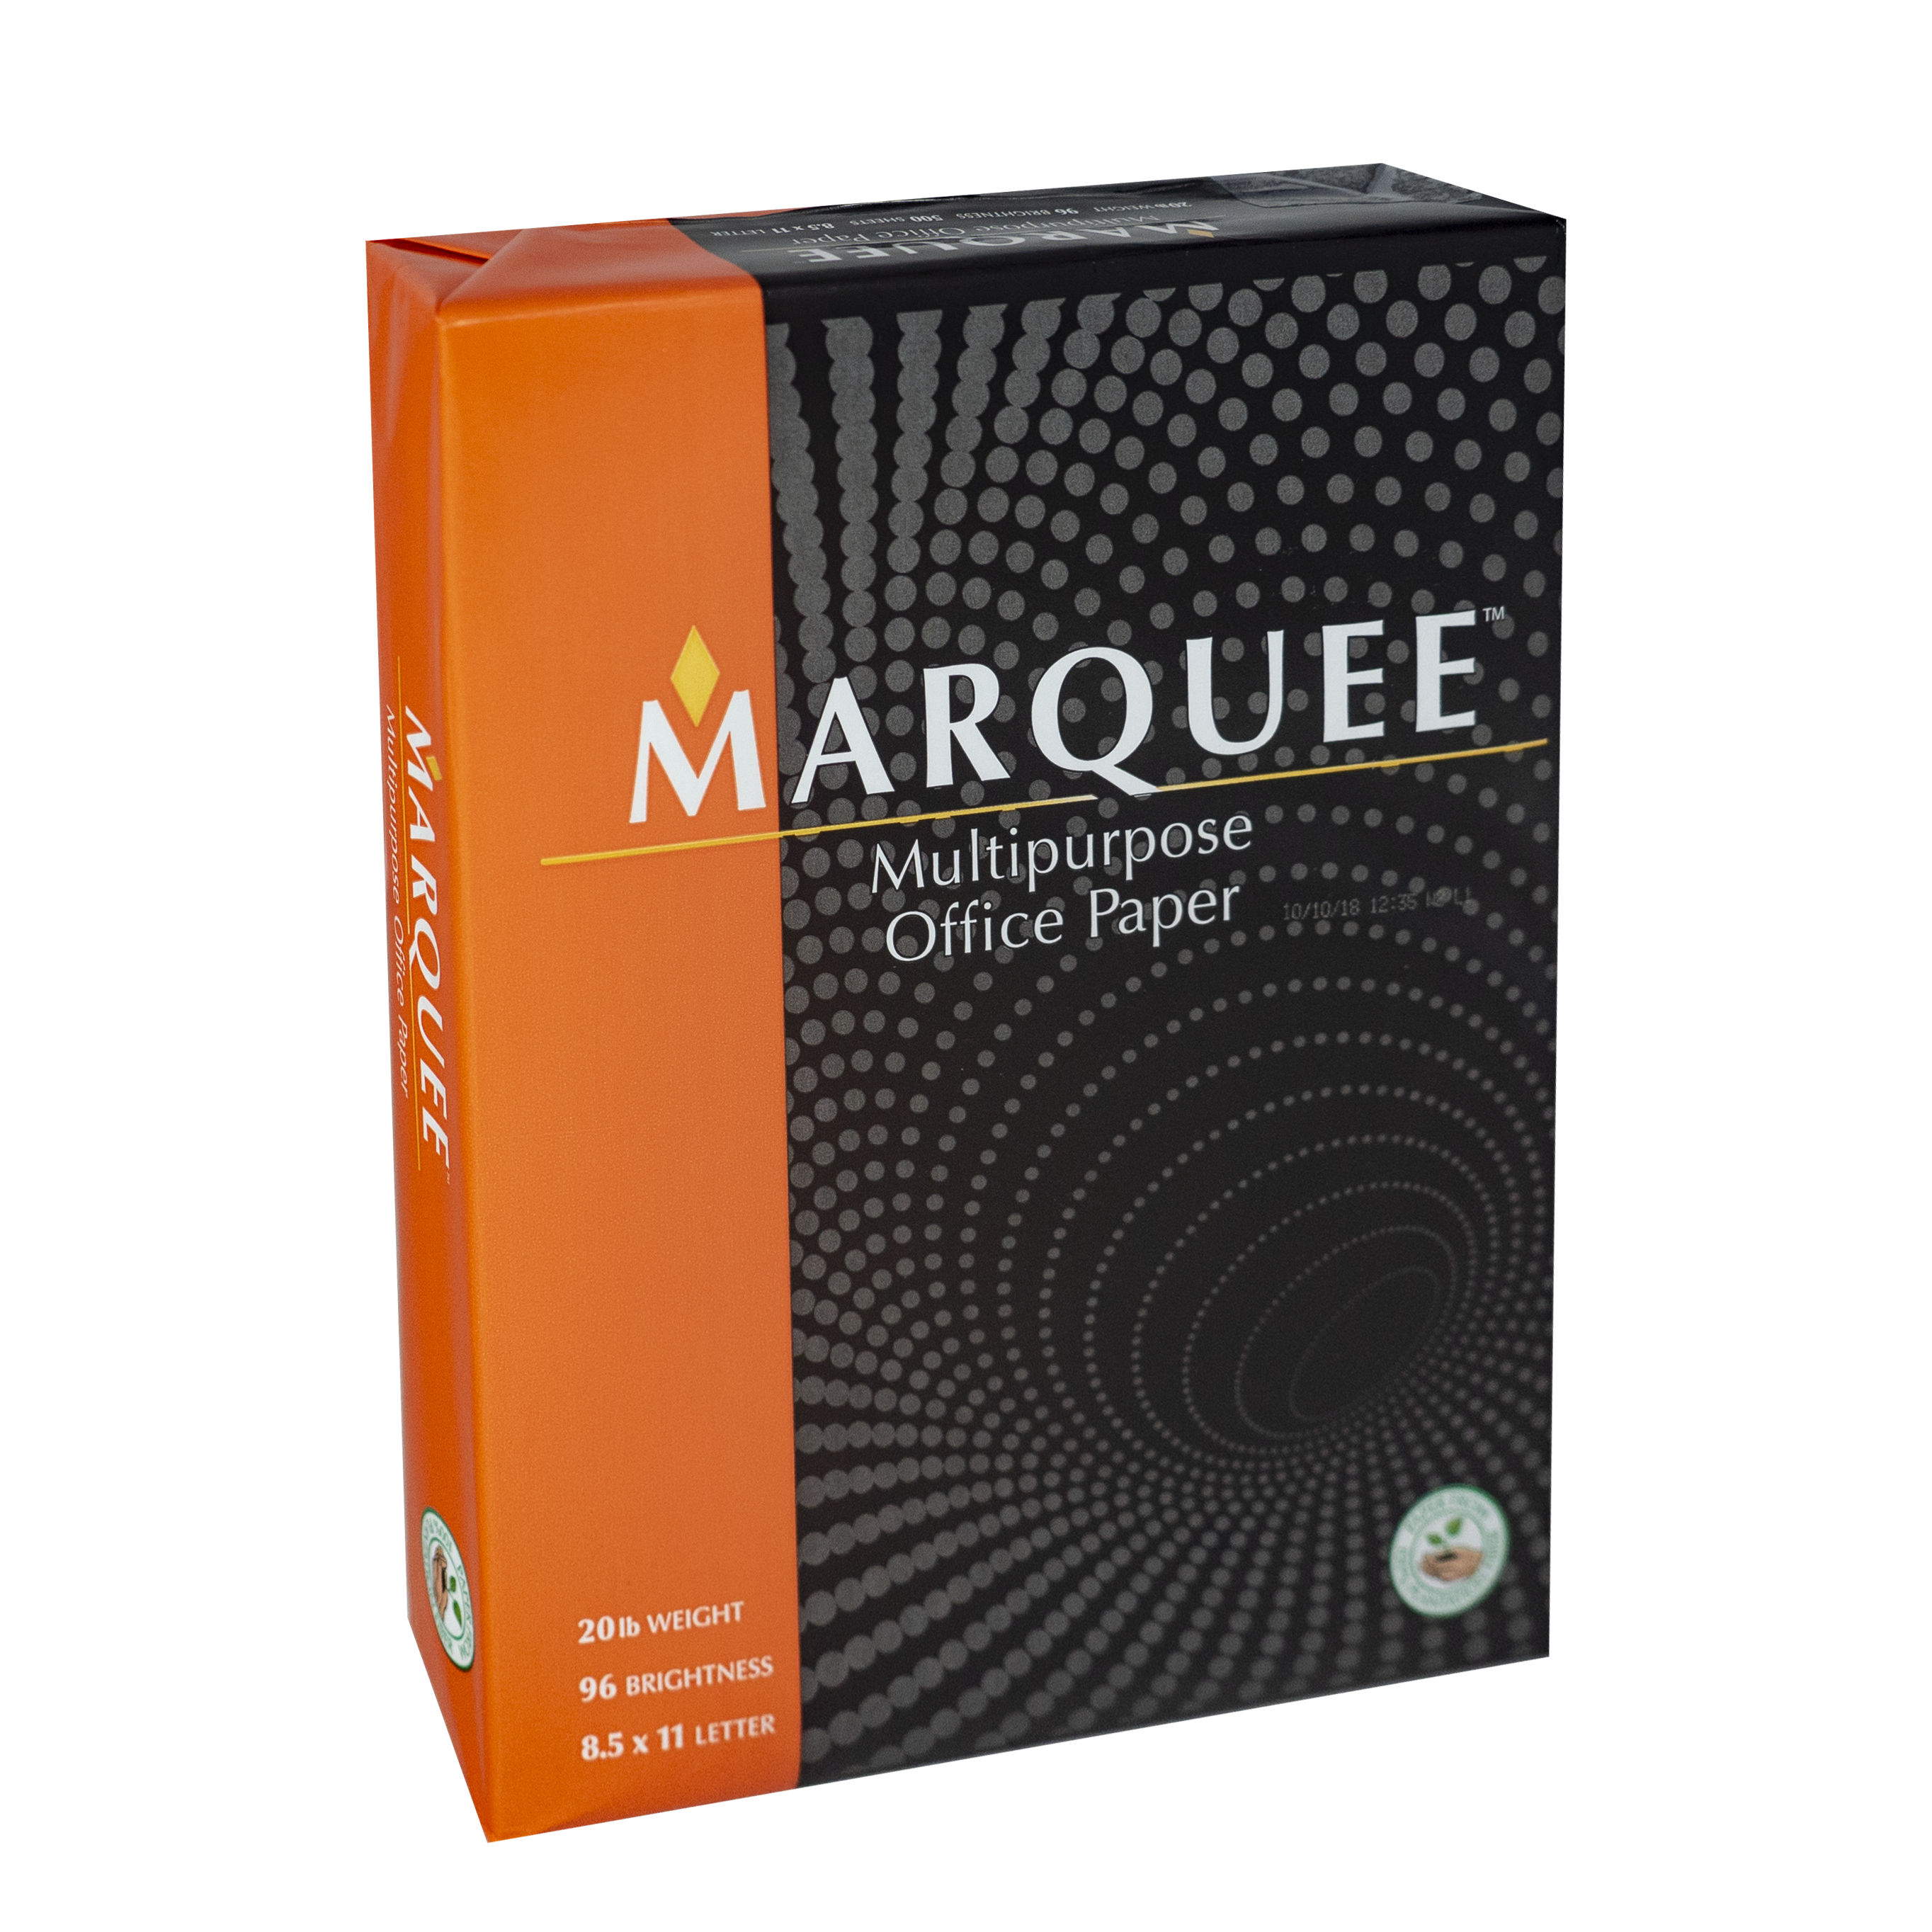 MARQUEE MULTIPURPOSE PAPER, 20LB, 96BR, 500 SHEETS/REAM, 10 REAMS/CARTON